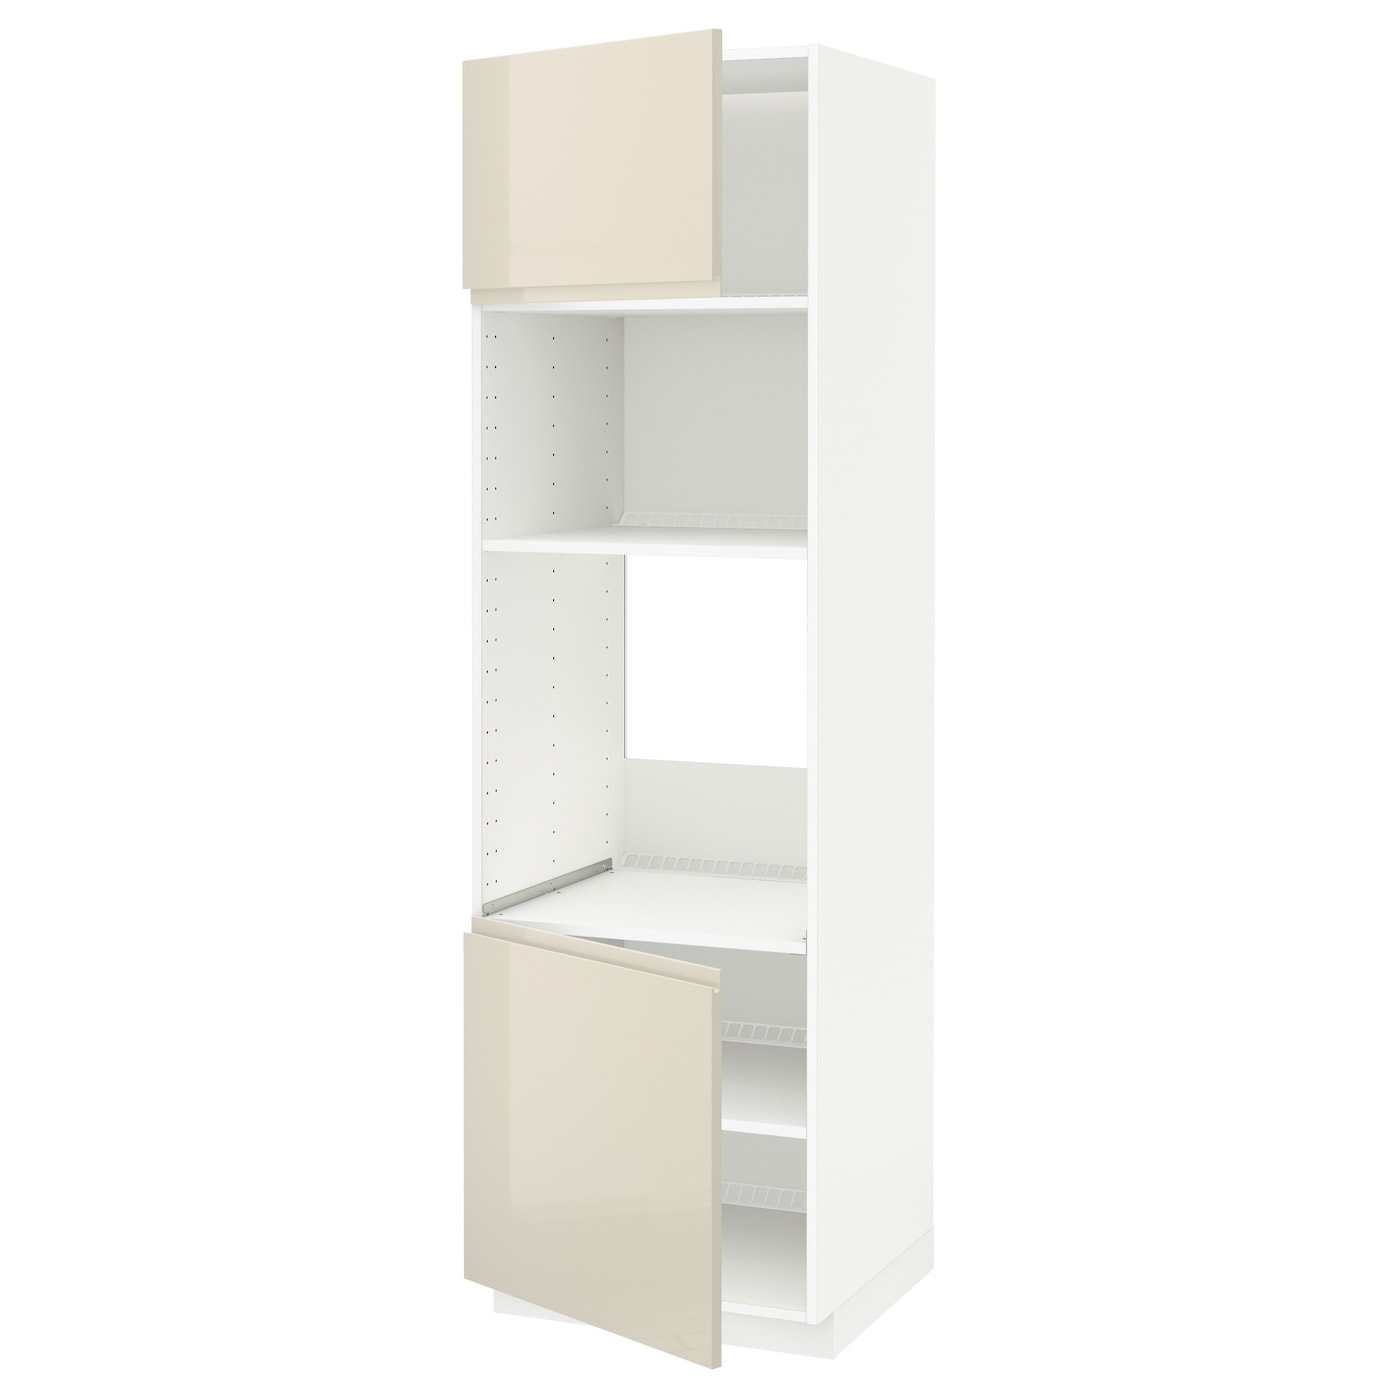 Кухонный шкаф-пенал - IKEA METOD/МЕТОД ИКЕА, 200х60х60 см, белый/бежевый глянцевый